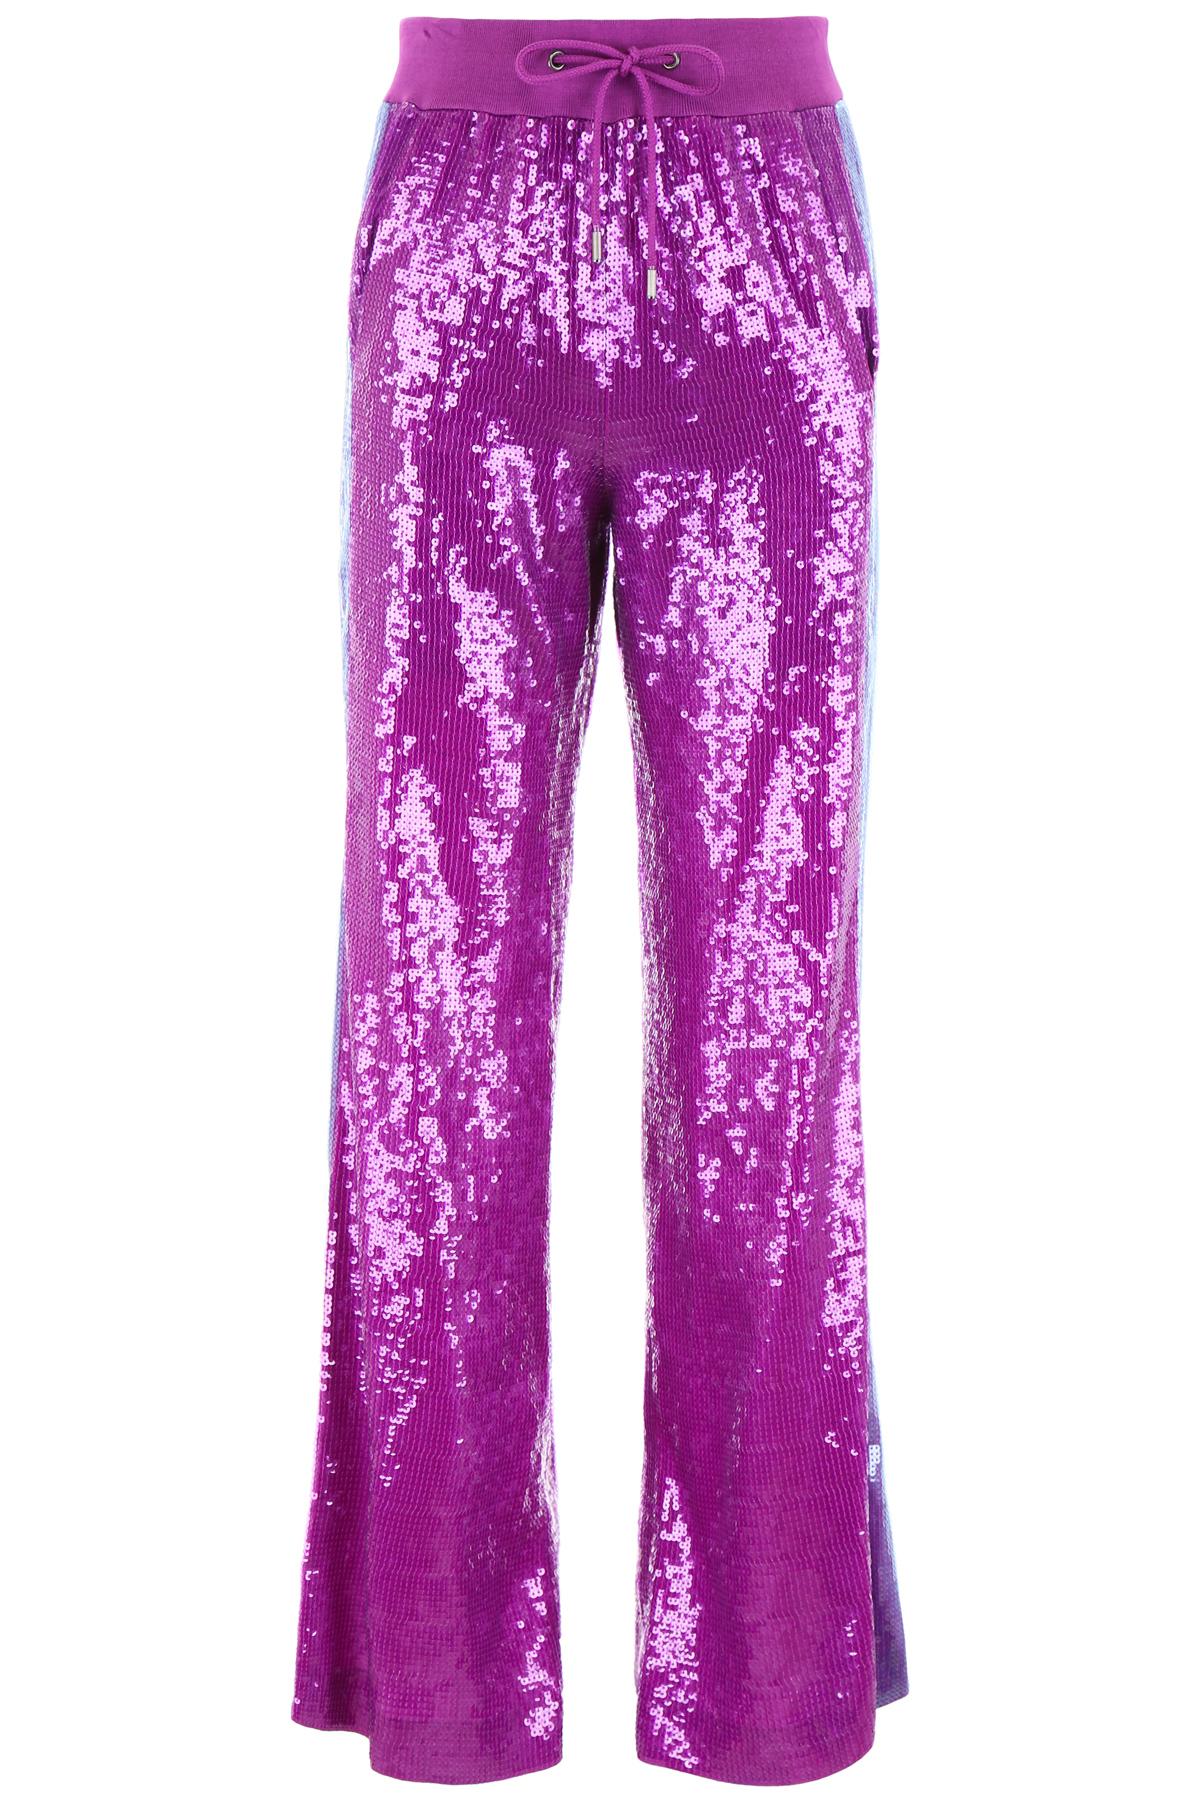 Alberta Ferretti Sequin Palazzo Pants in Purple - Lyst